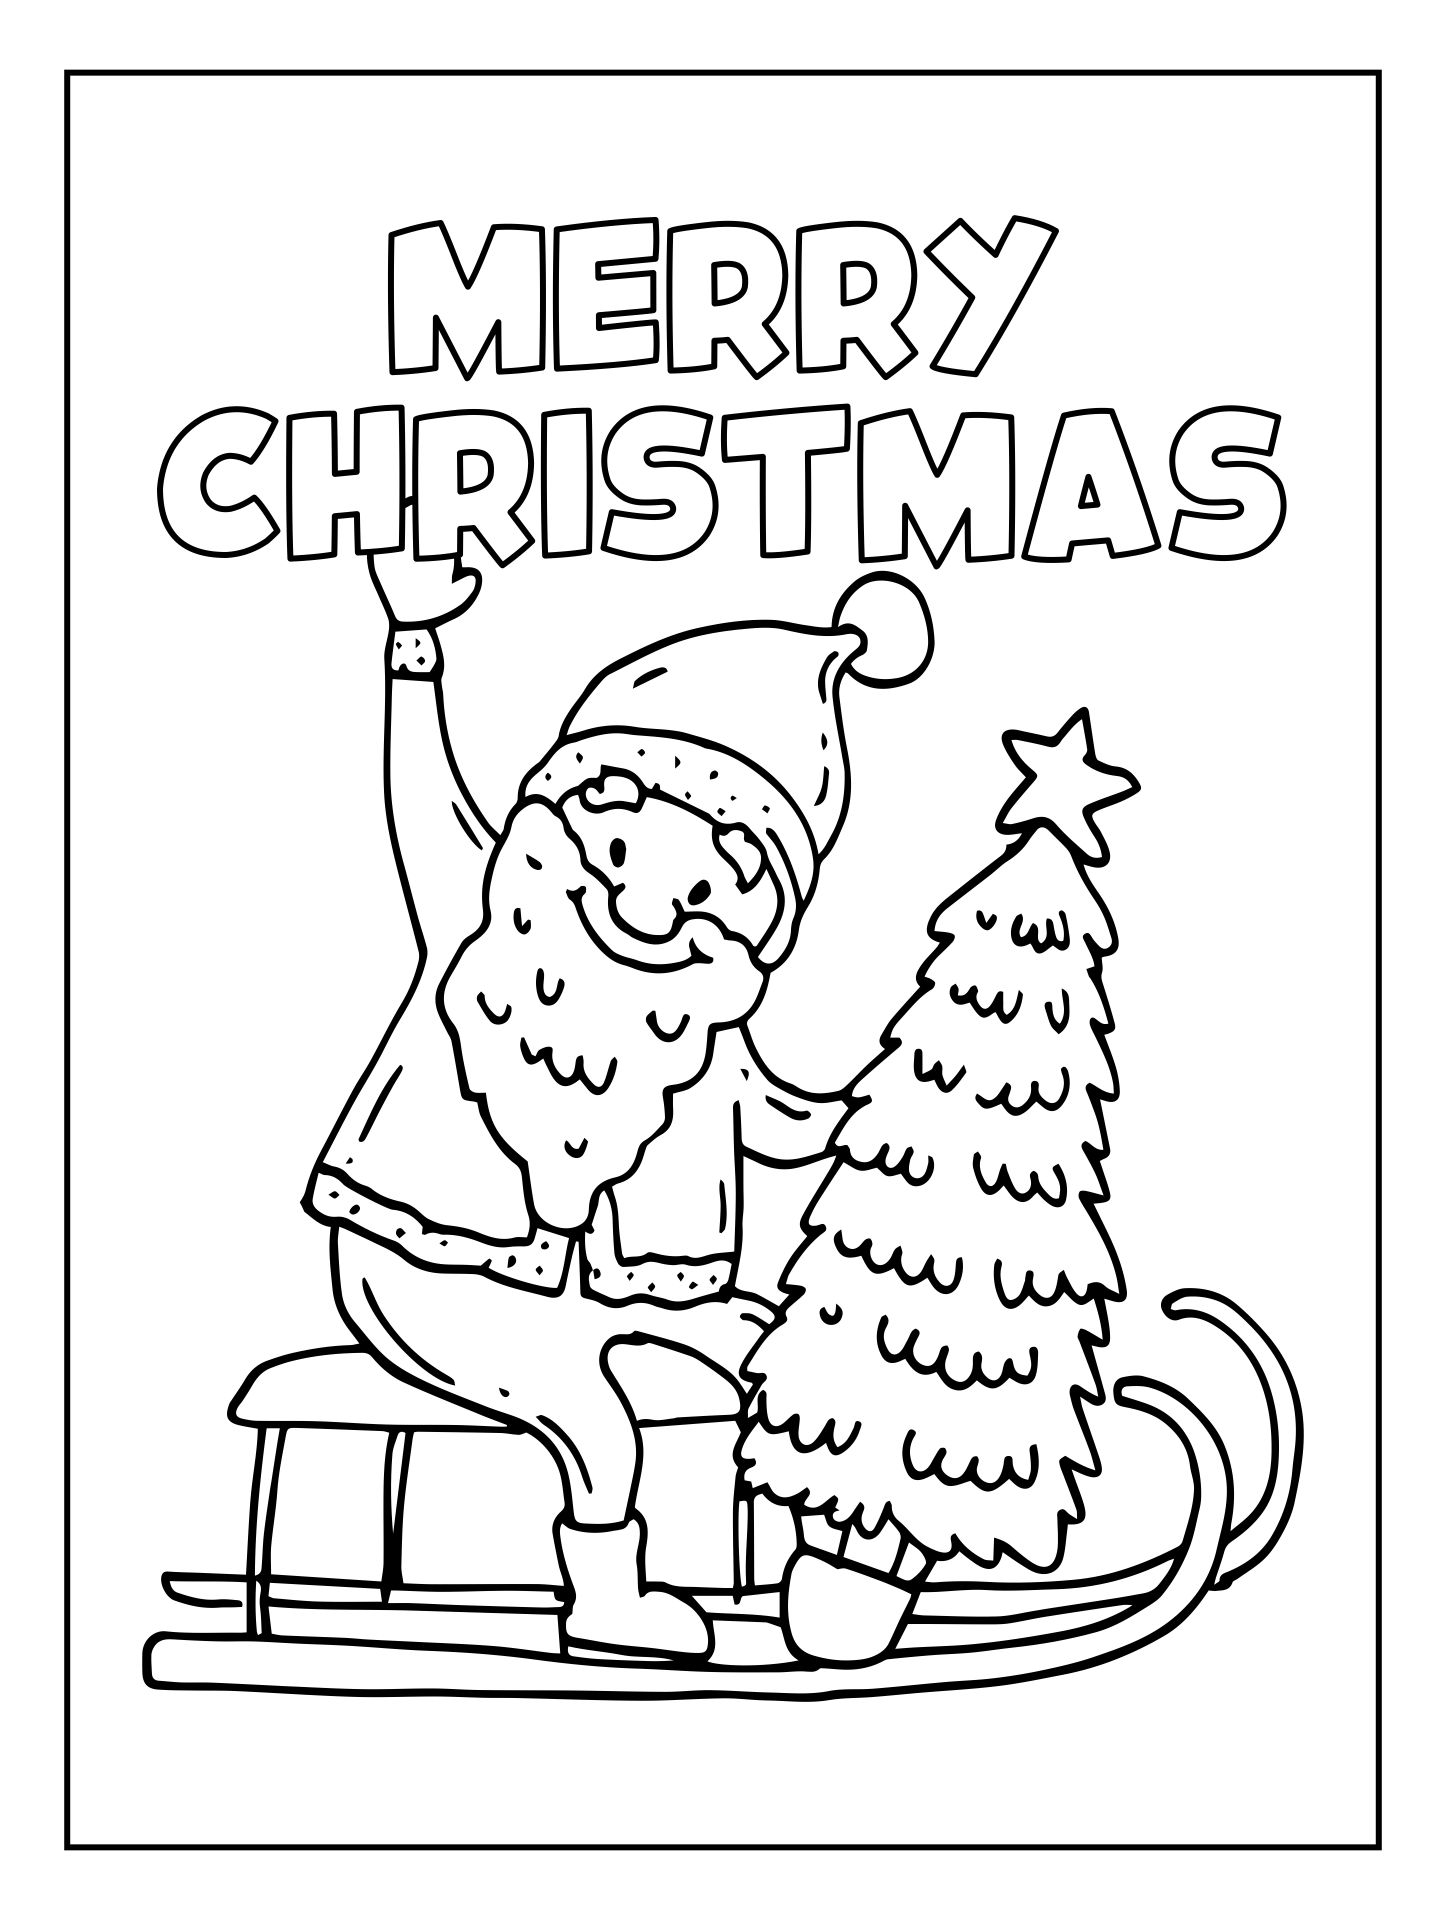 Printable Christmas Cards You Can Color